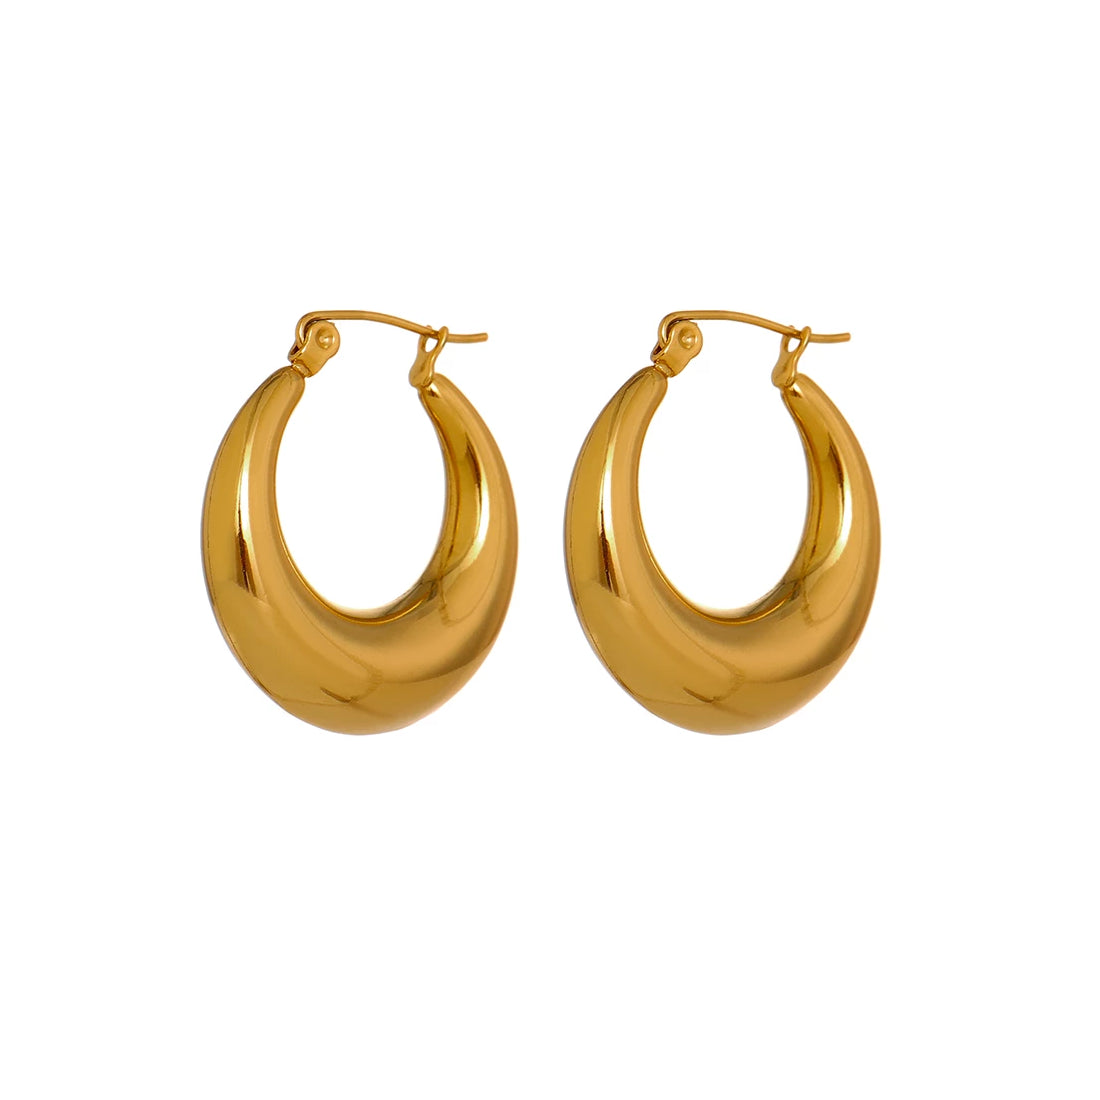 Dalia Ohrringe Yasemen Store Schmuck Accessoires Edelstahl Stainless Steel 18K Vergoldet Gold jewel jewelry earring